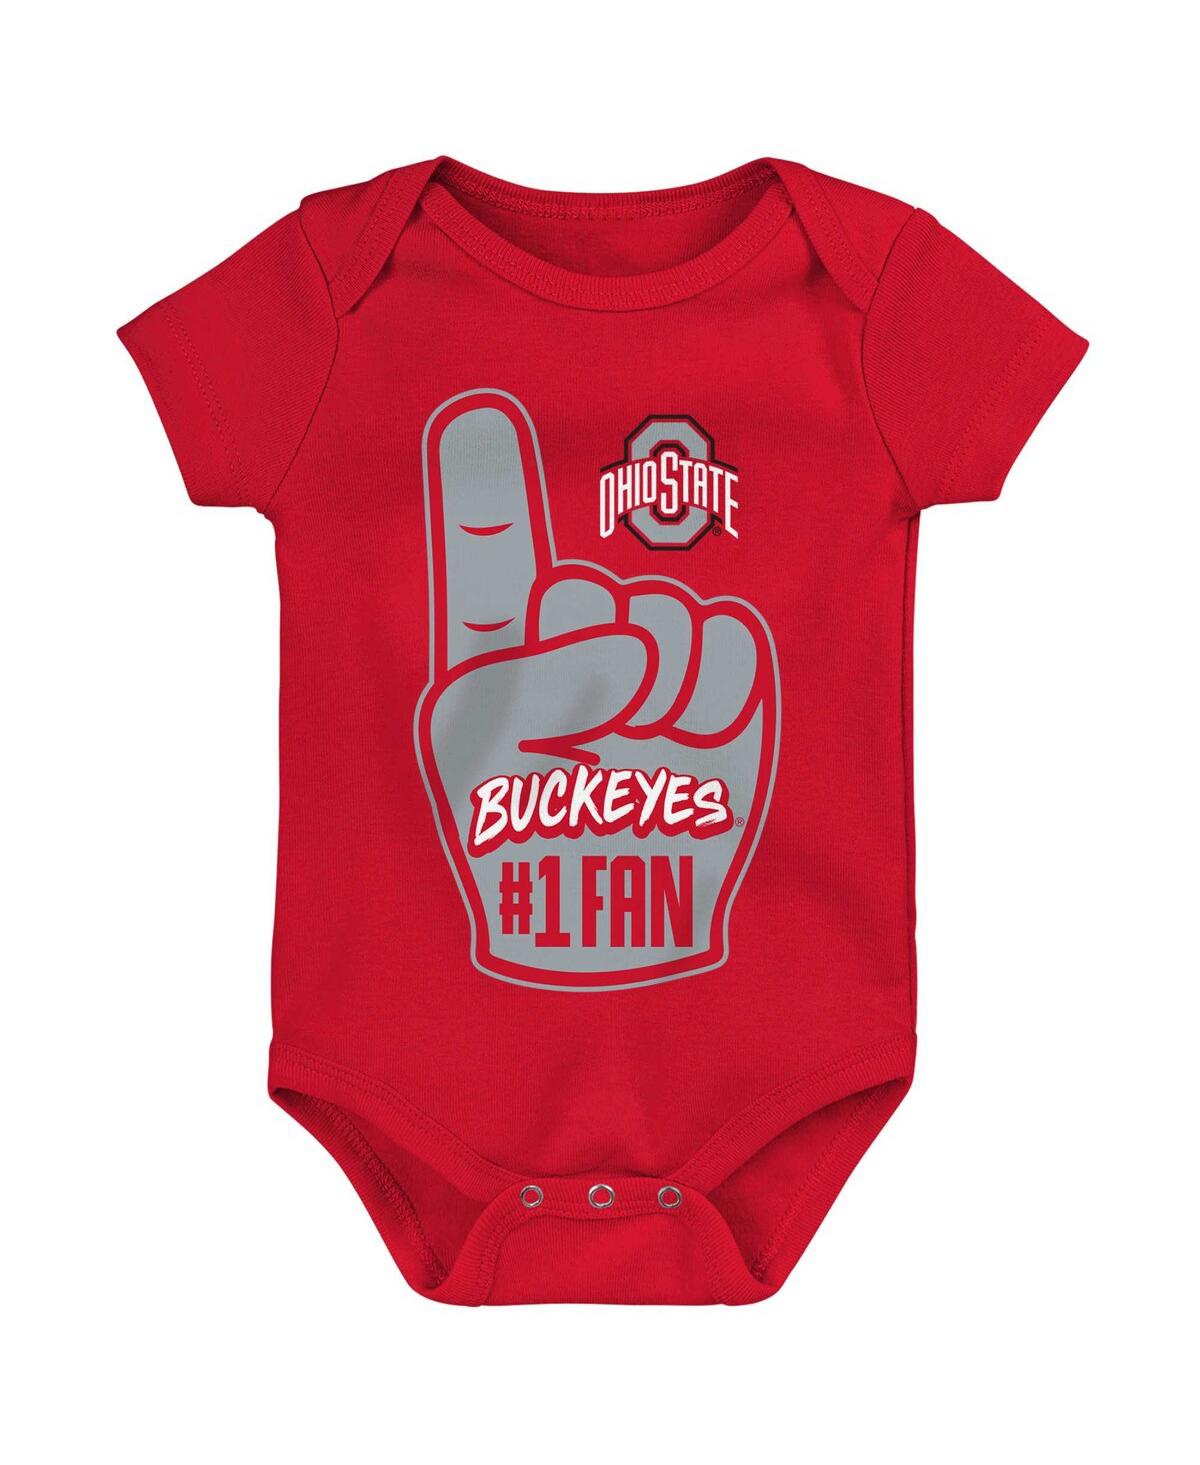 Outerstuff Babies' Newborn And Infant Boys And Girls Scarlet Ohio State Buckeyes #1 Fan Foam Finger Bodysuit